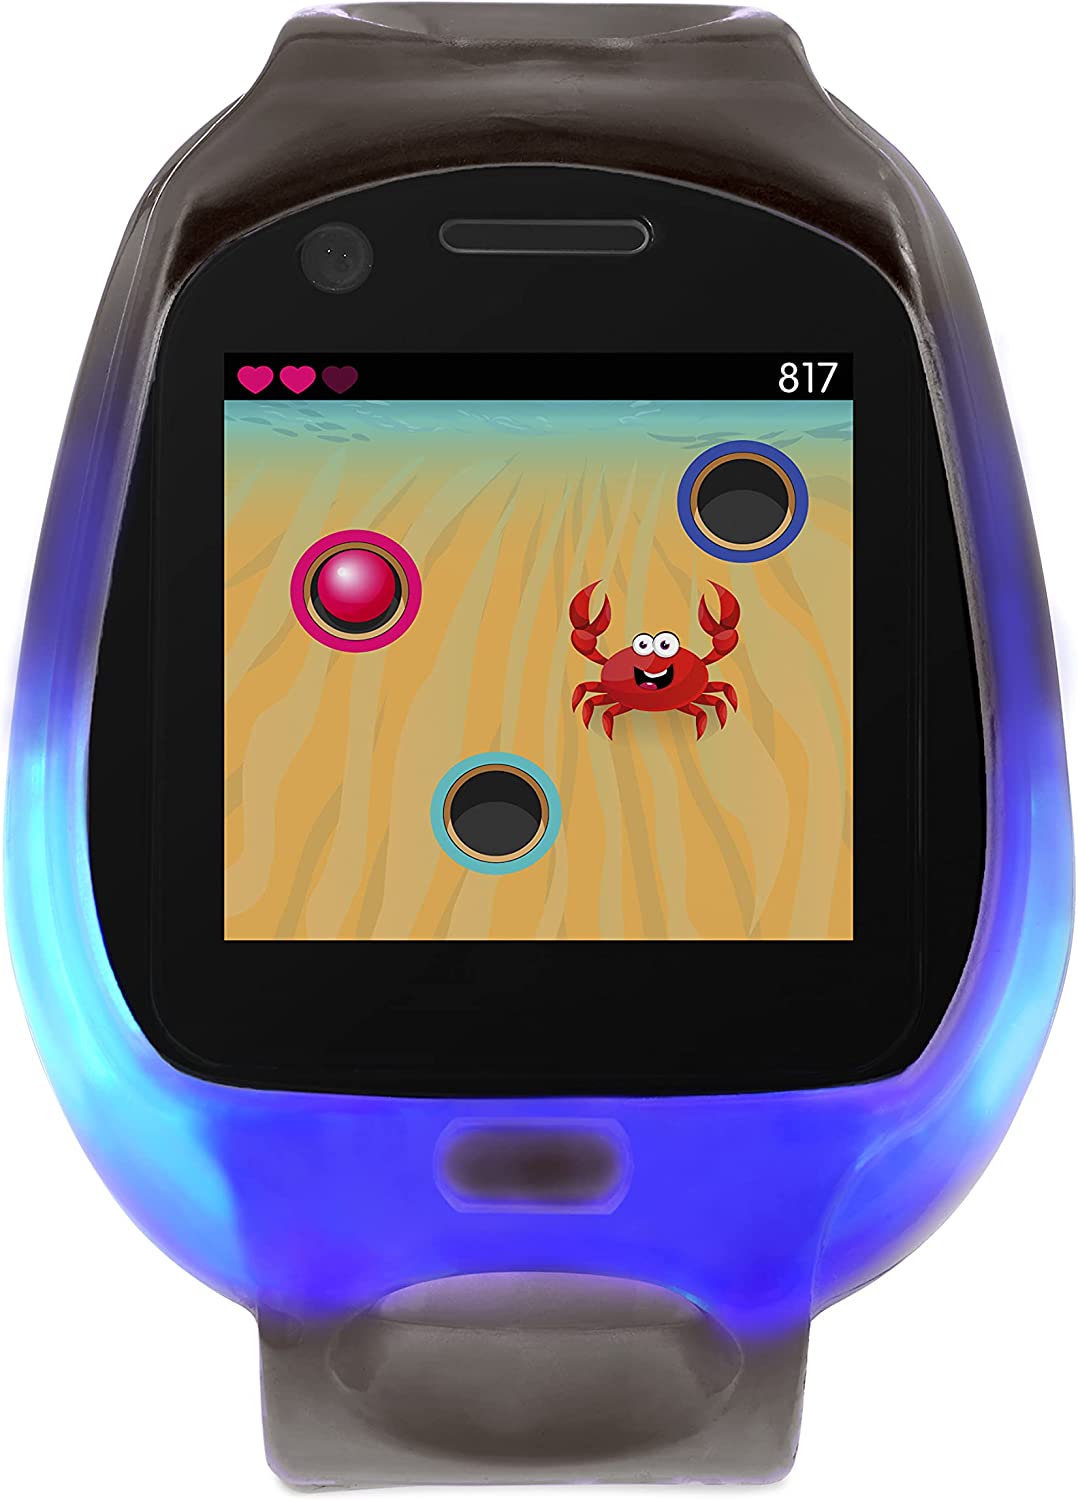 Little Tikes Tobi 2 Robot Smartwatch w/ Games, Pedometer, Alarm Clock, Camera (Black) $17.34 + F/S w/ Prime or on Orders $25+